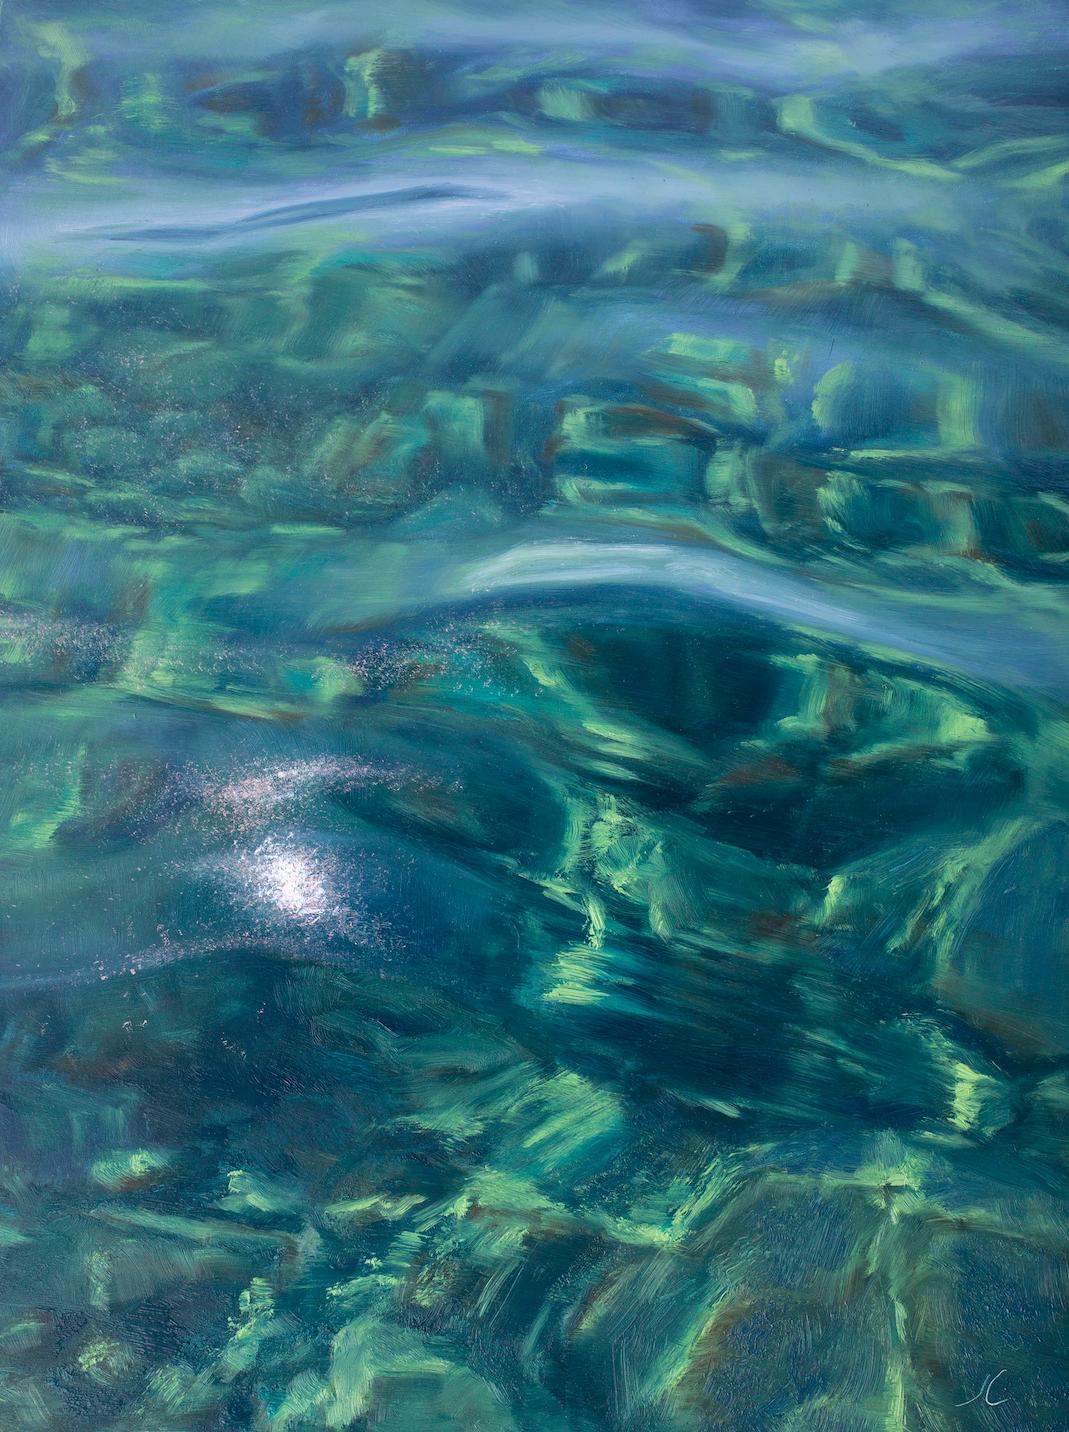 Meditation on Water IIII - ocean pattern original oil painting seascape reaslism - Painting by Irina Cumberland